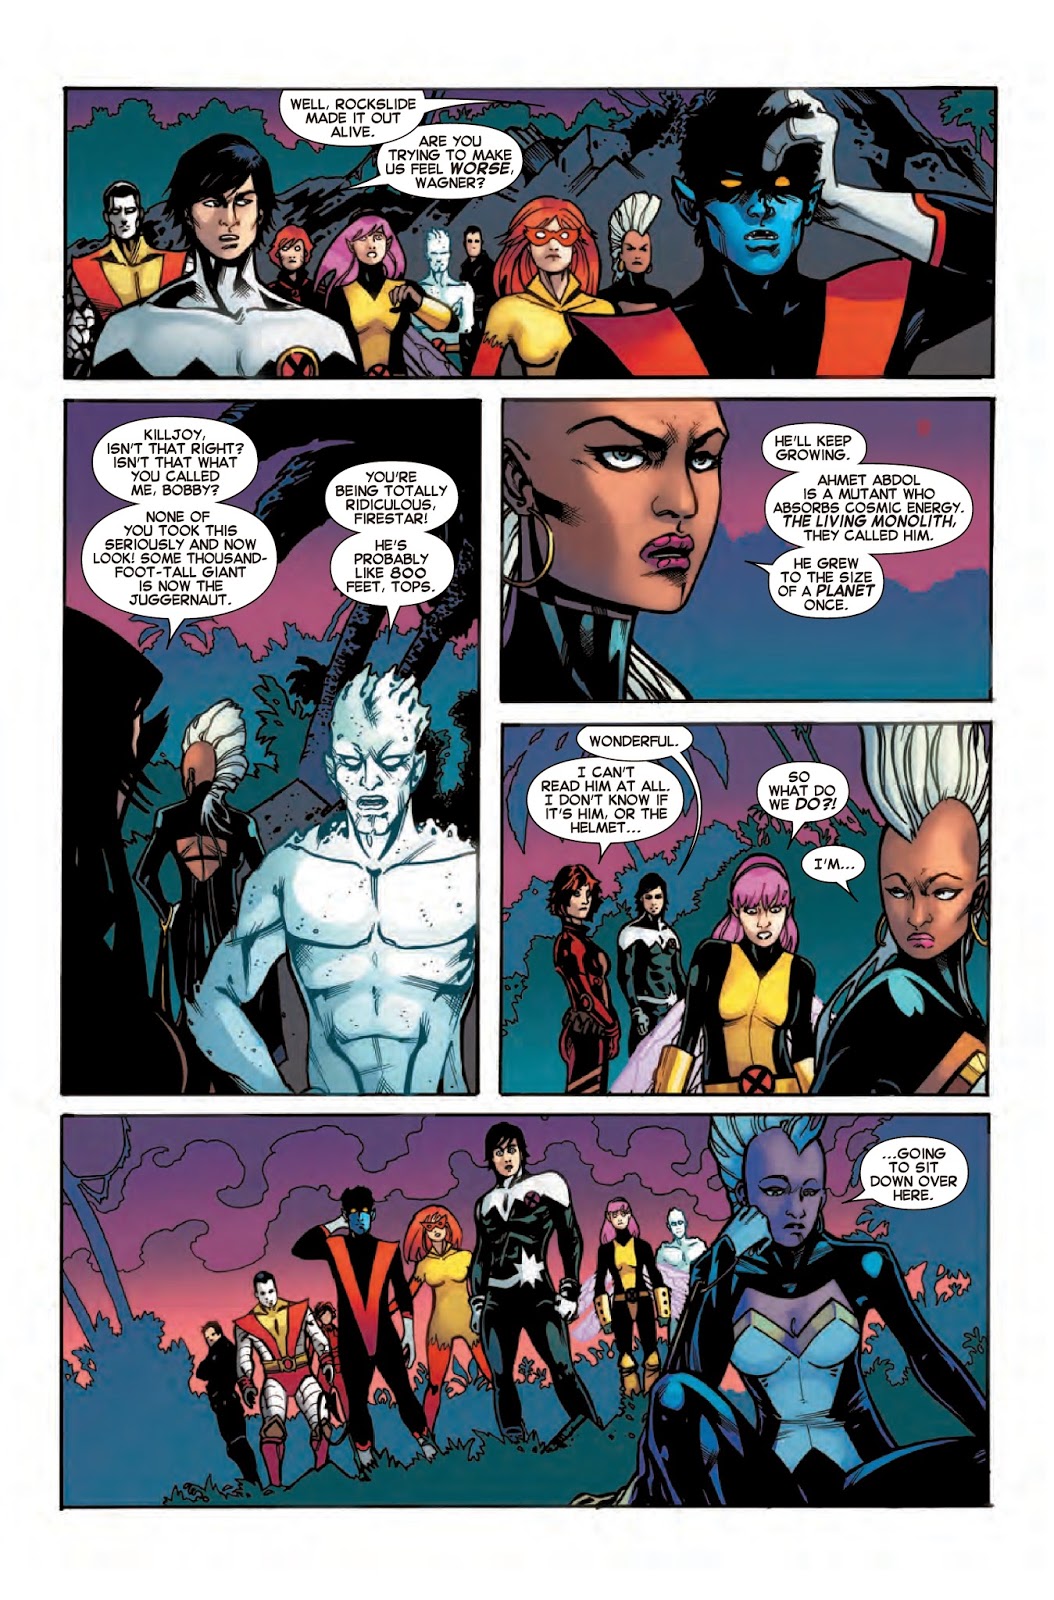 The Amazing X-Men try to defeat Juggernaut